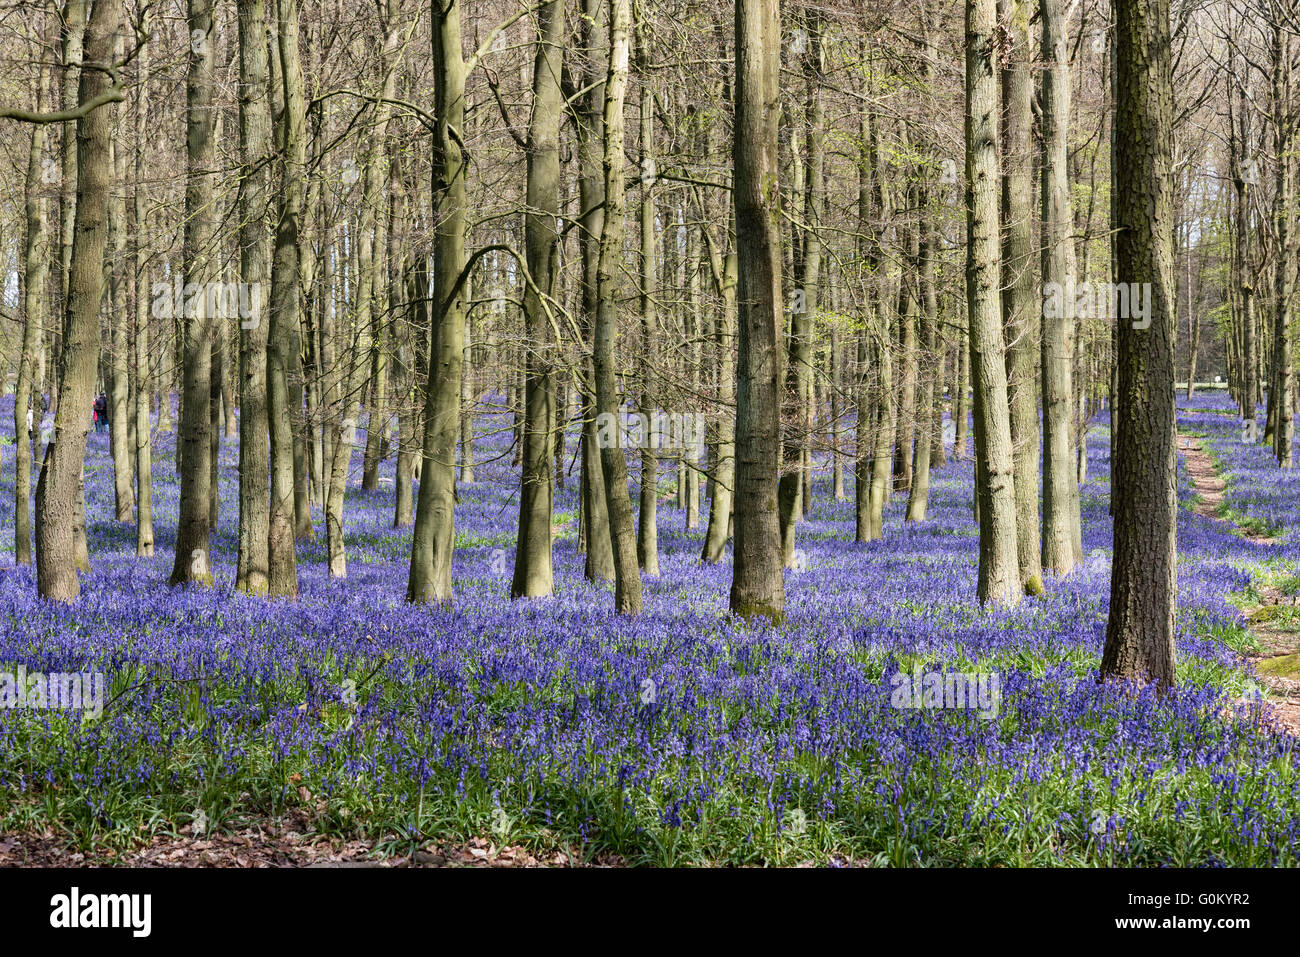 Carpet of native English bluebell flowers amongst beech trees in Dockey Wood, Ashridge, UK. Stock Photo